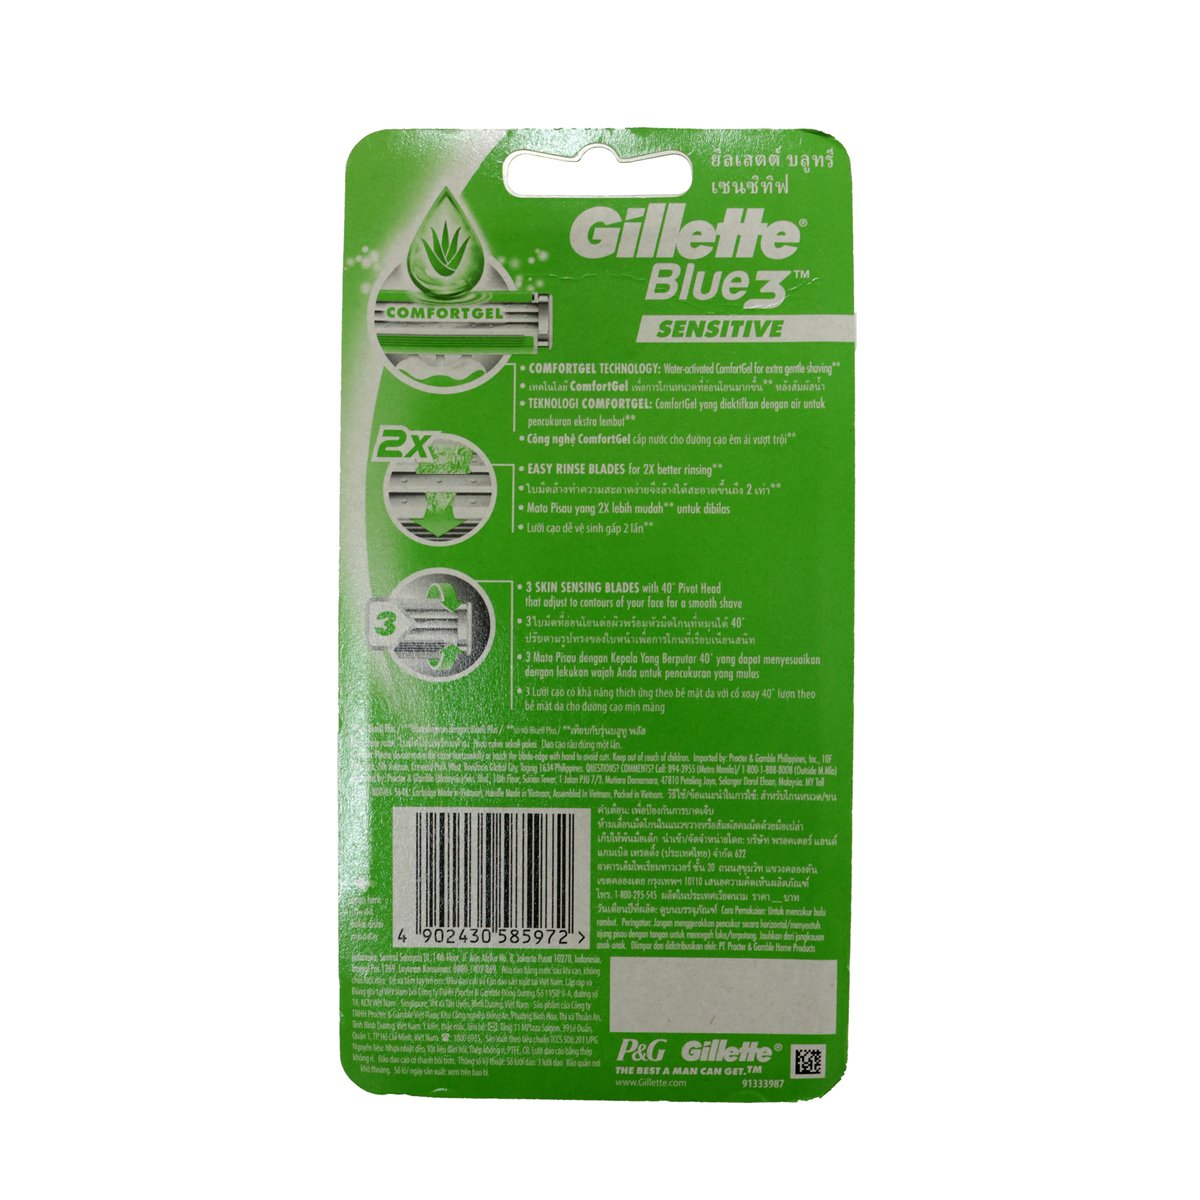 Gillette Blue 3 Sensitive Razors 2pcs